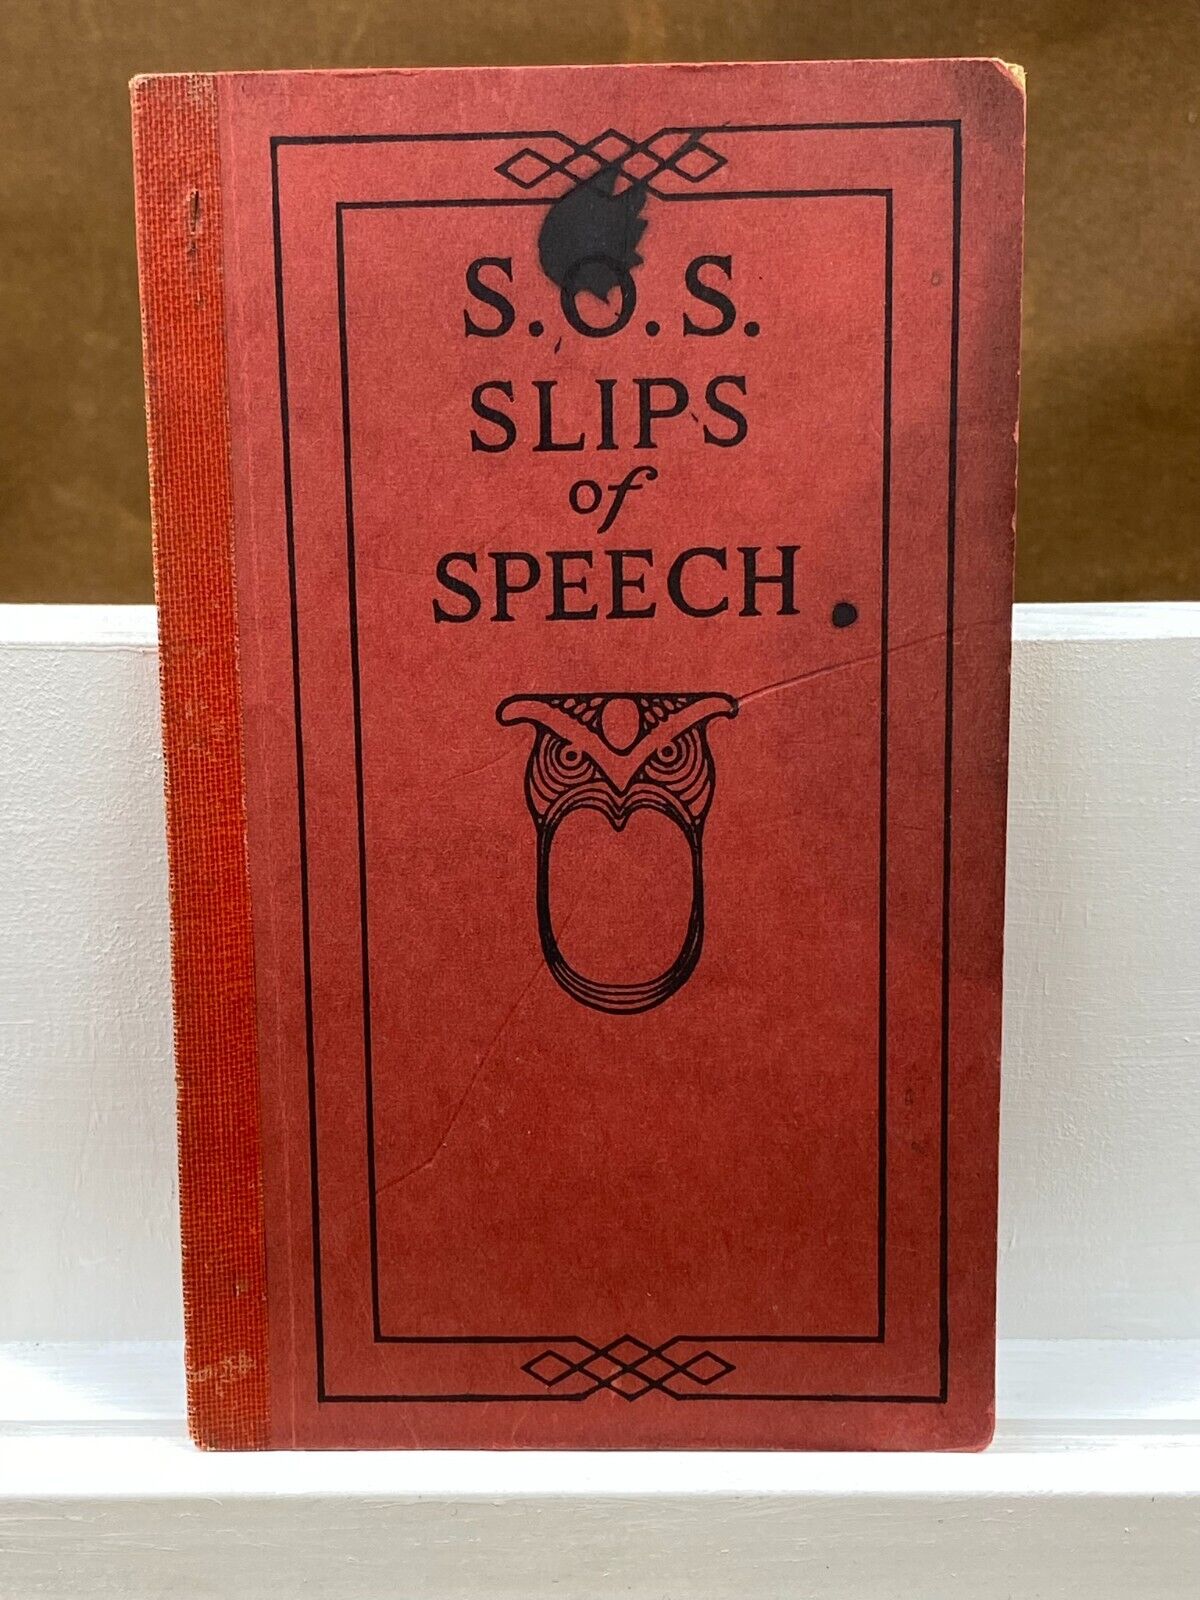 1922 SOS Slips of Speech Proper Use of Language Words Booklet Primer English